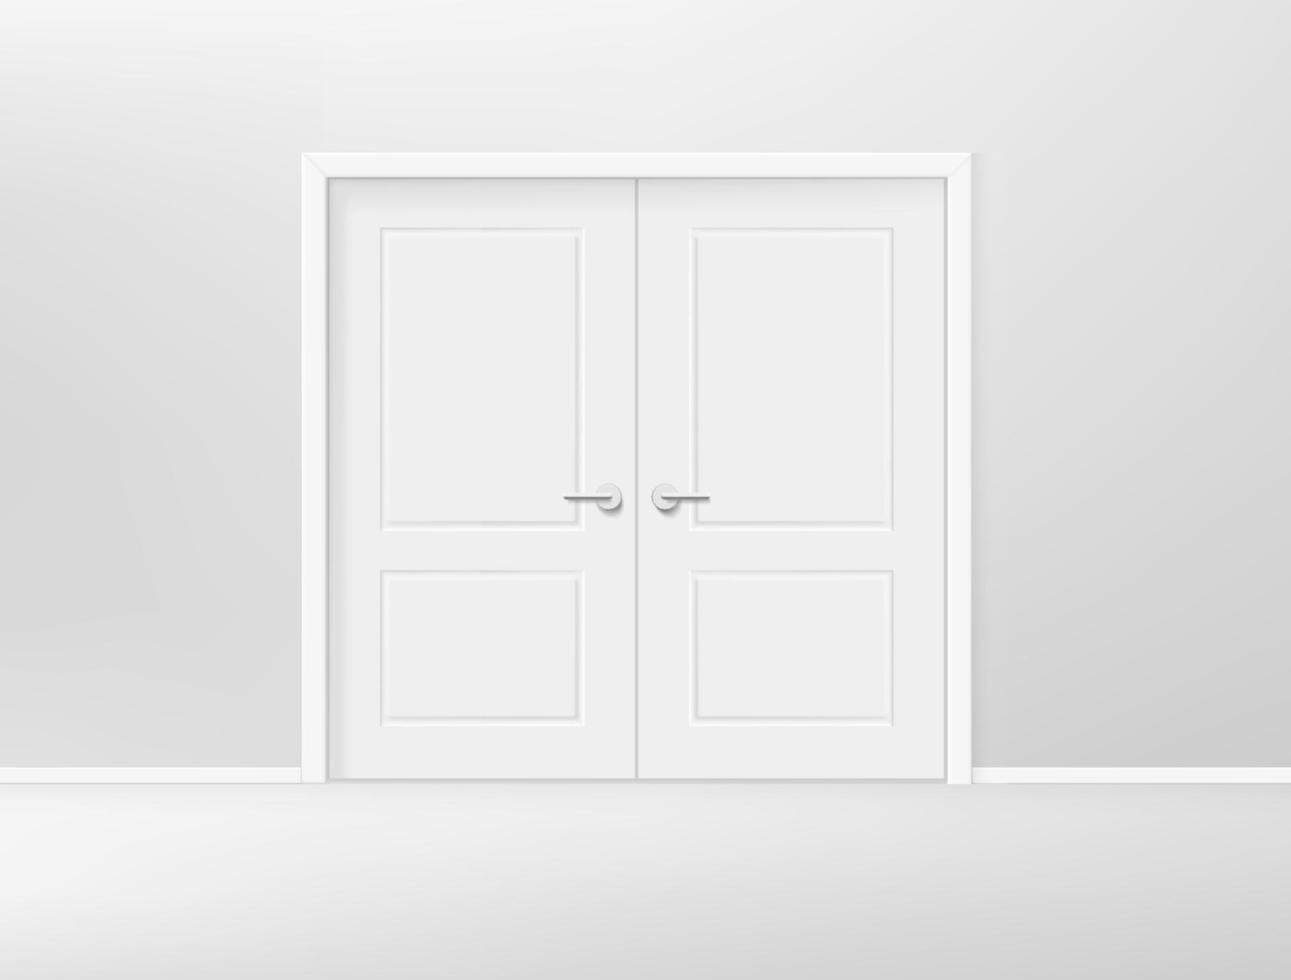 Double door entrance in a corridor. Realistic 3d style vector illustration